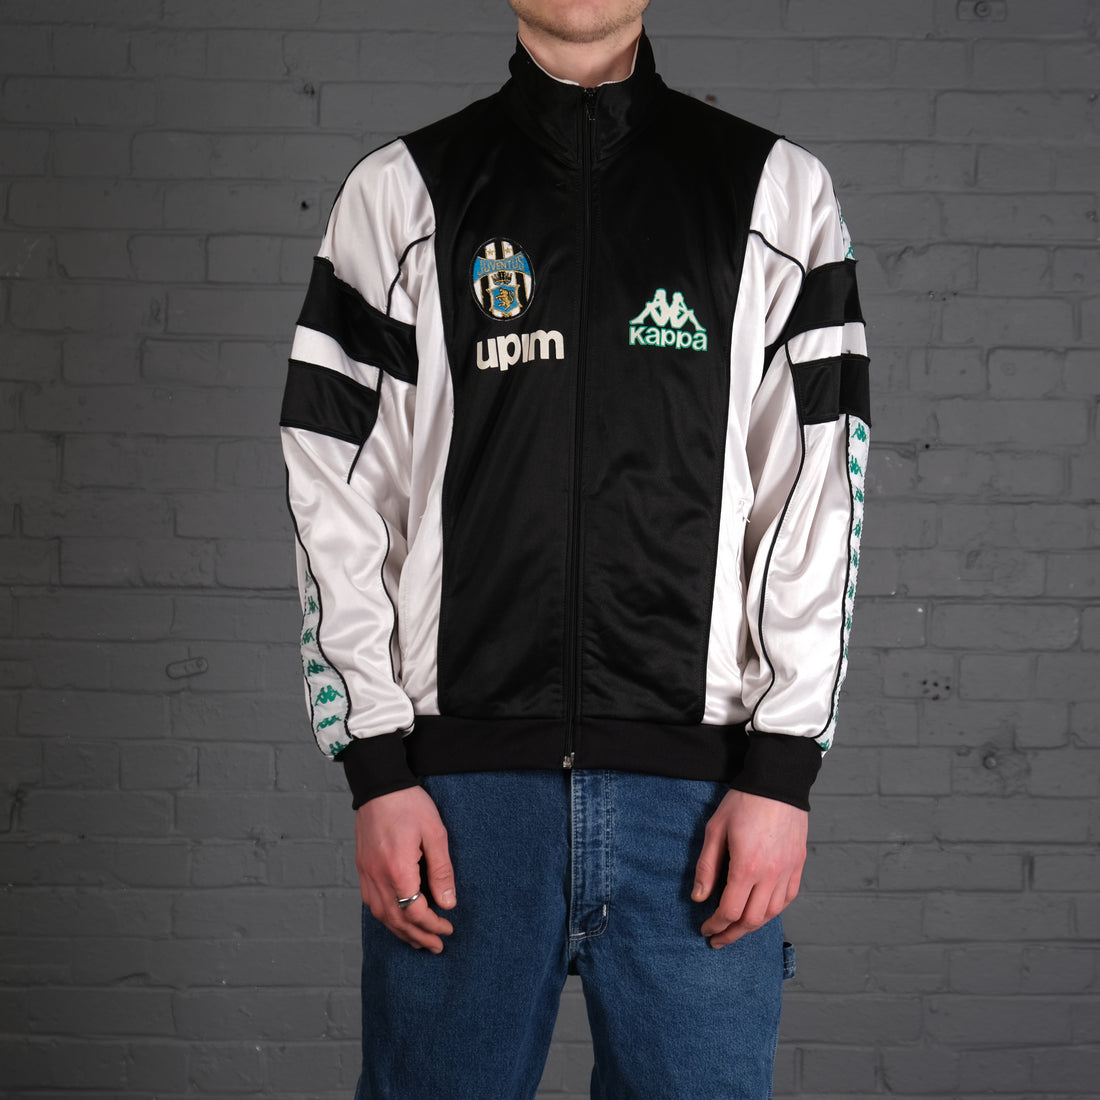 Vintage Juventus Kappa track jacket